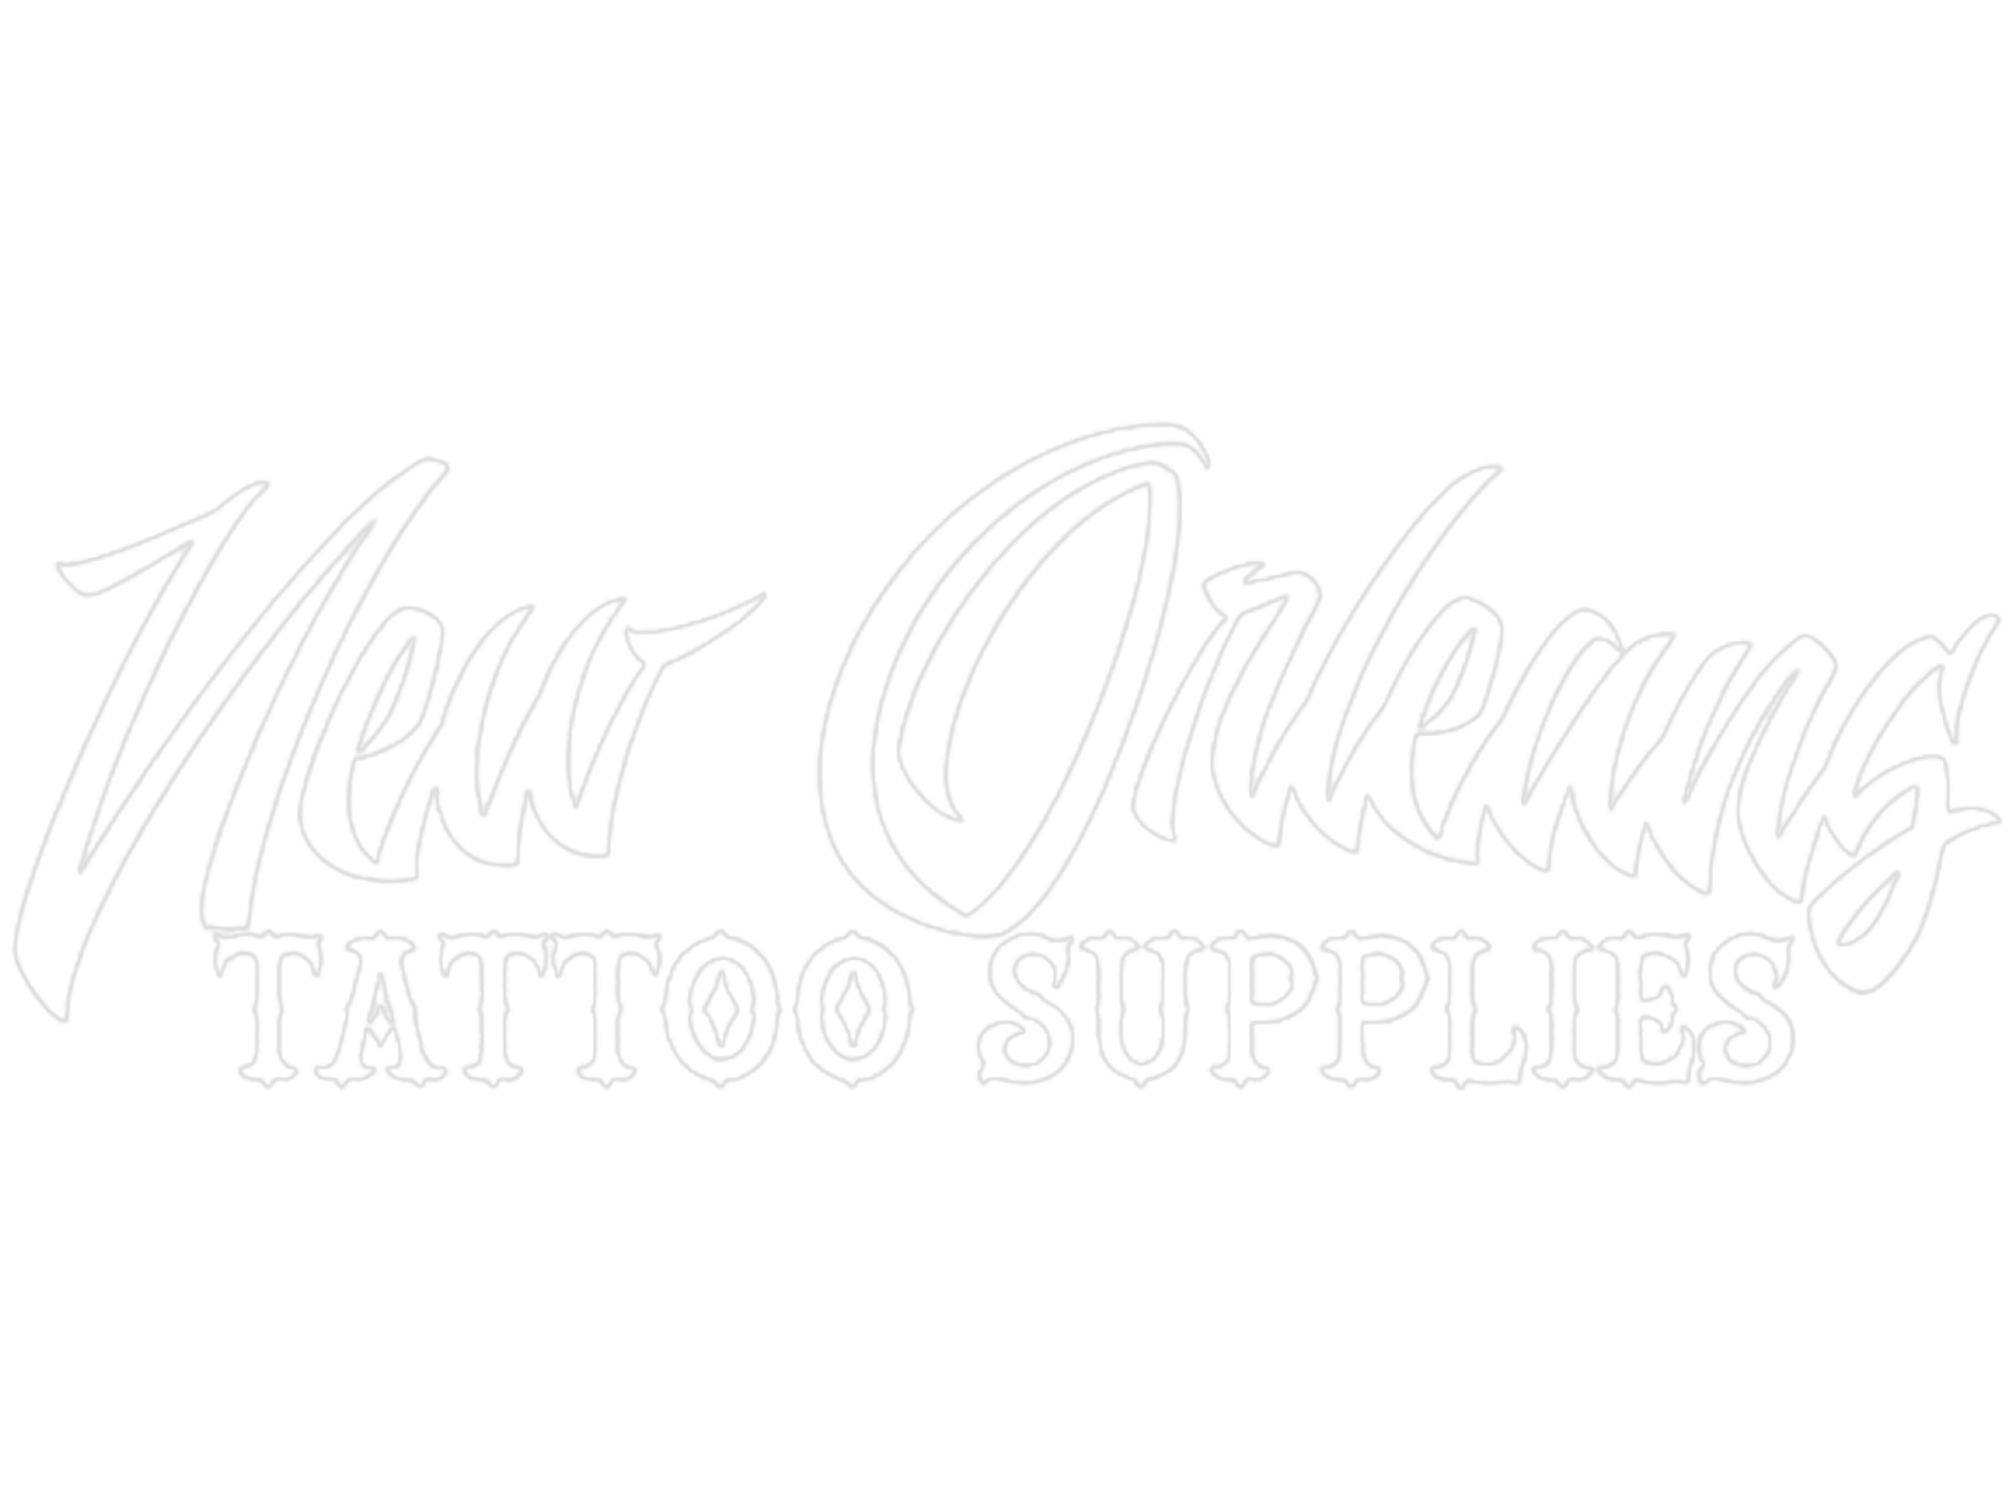 New Orleans Tattoo Supplies